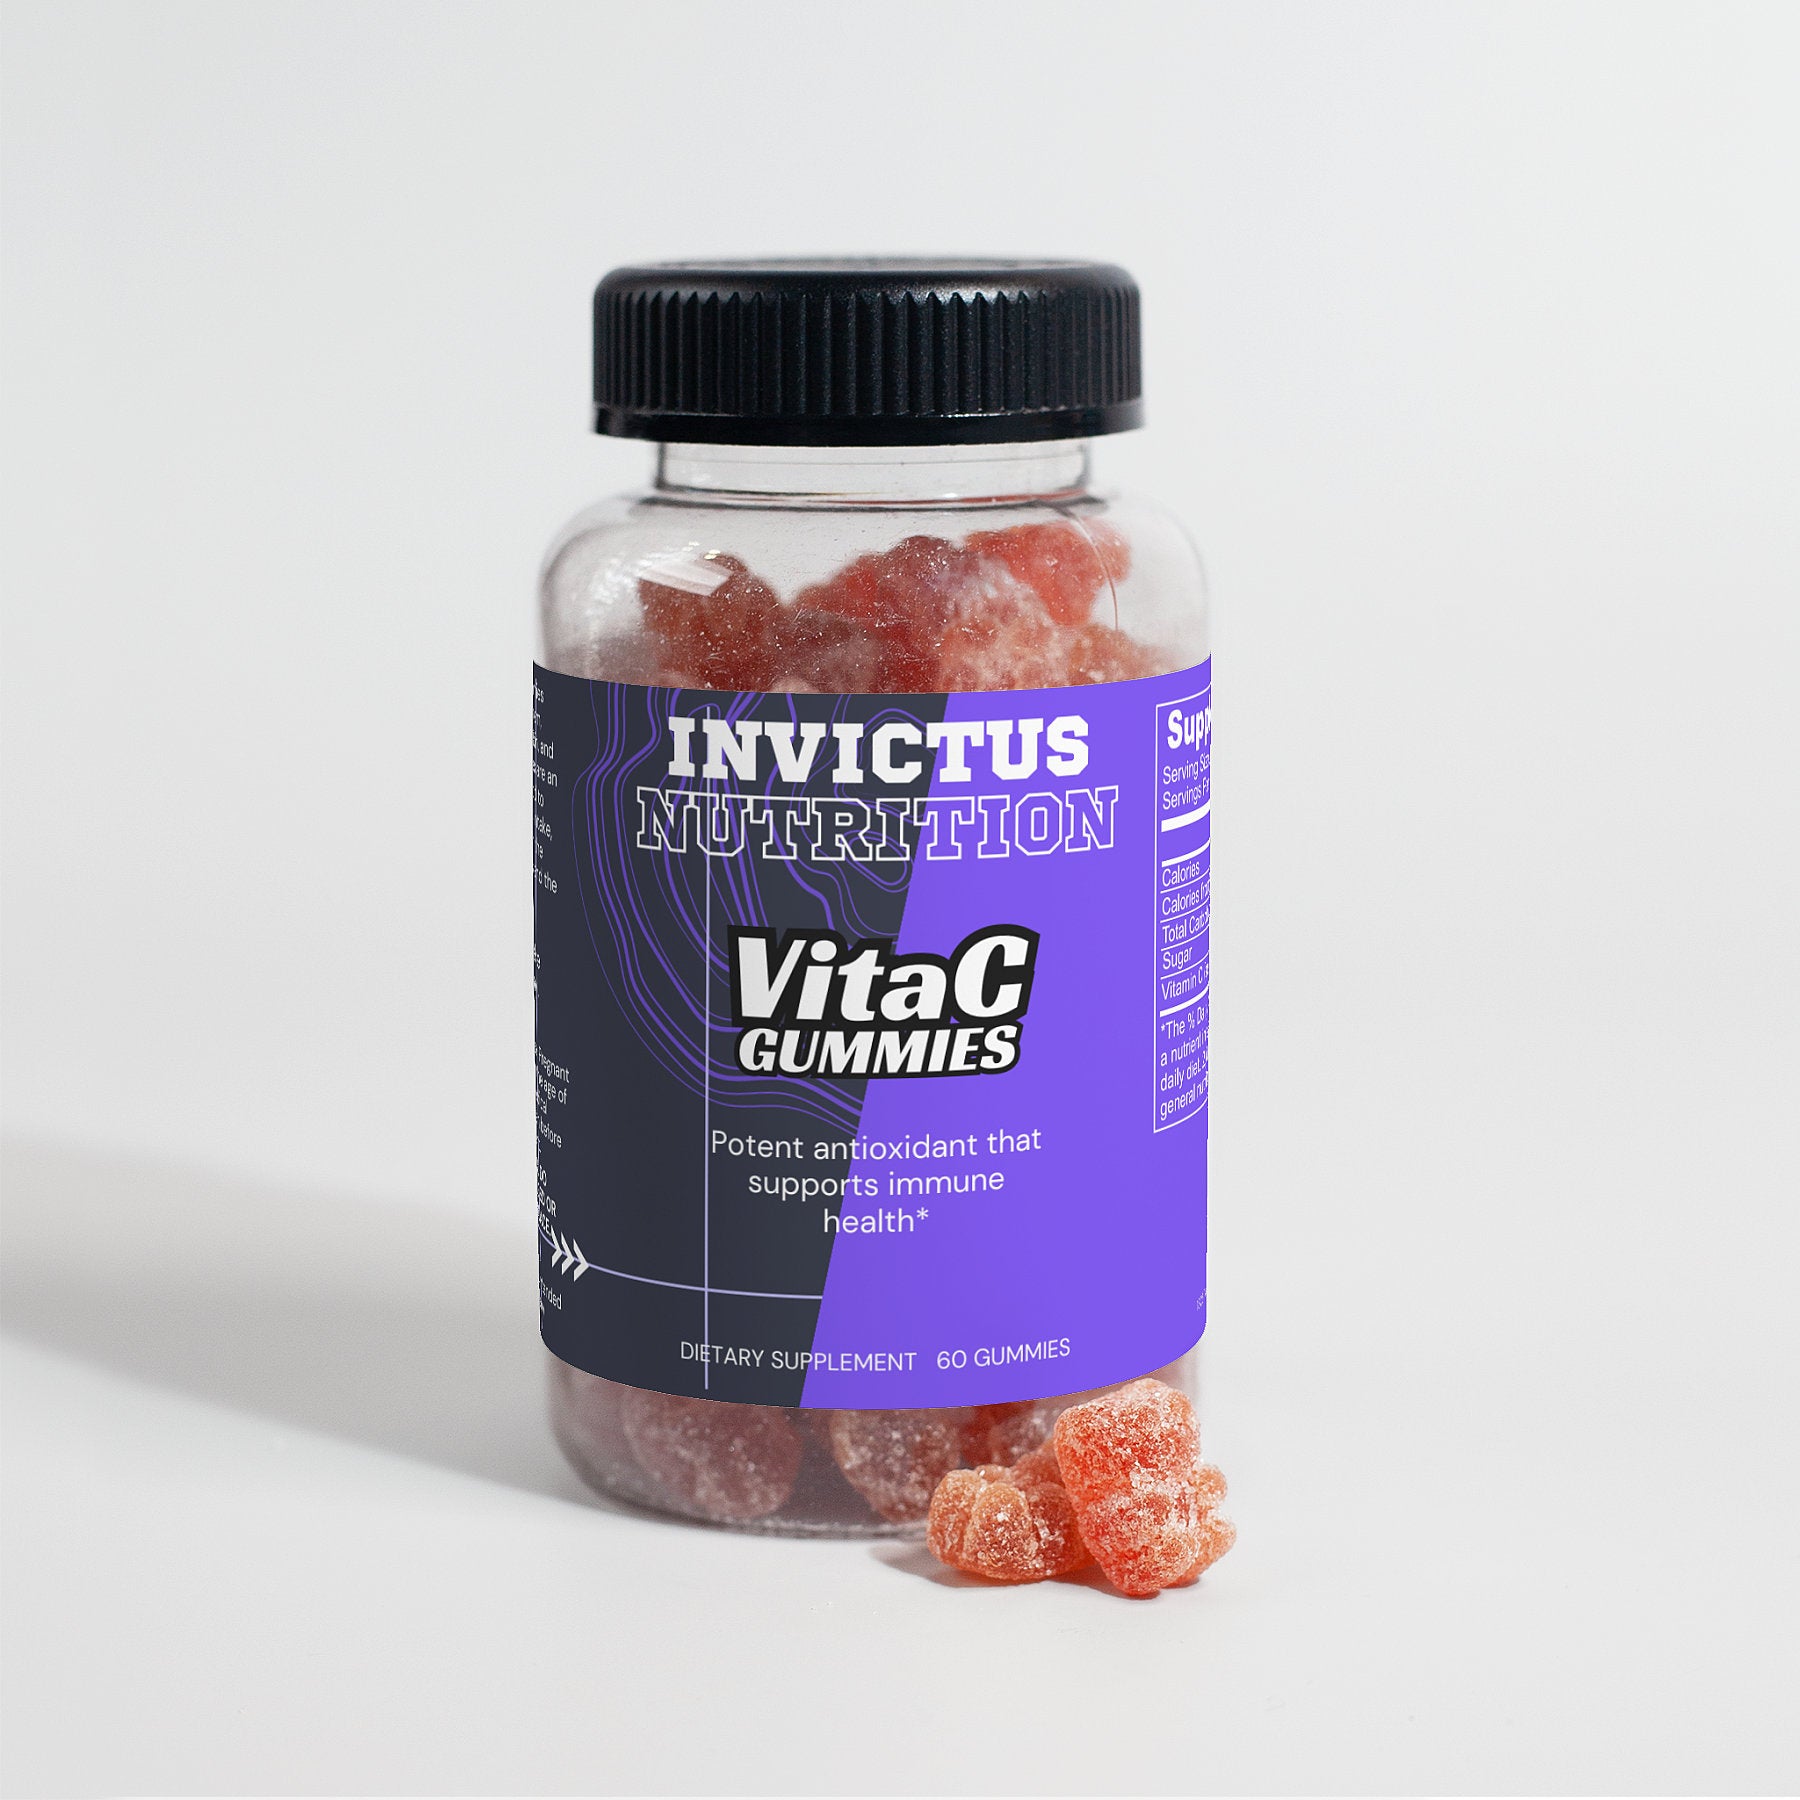 VitaC Gummies